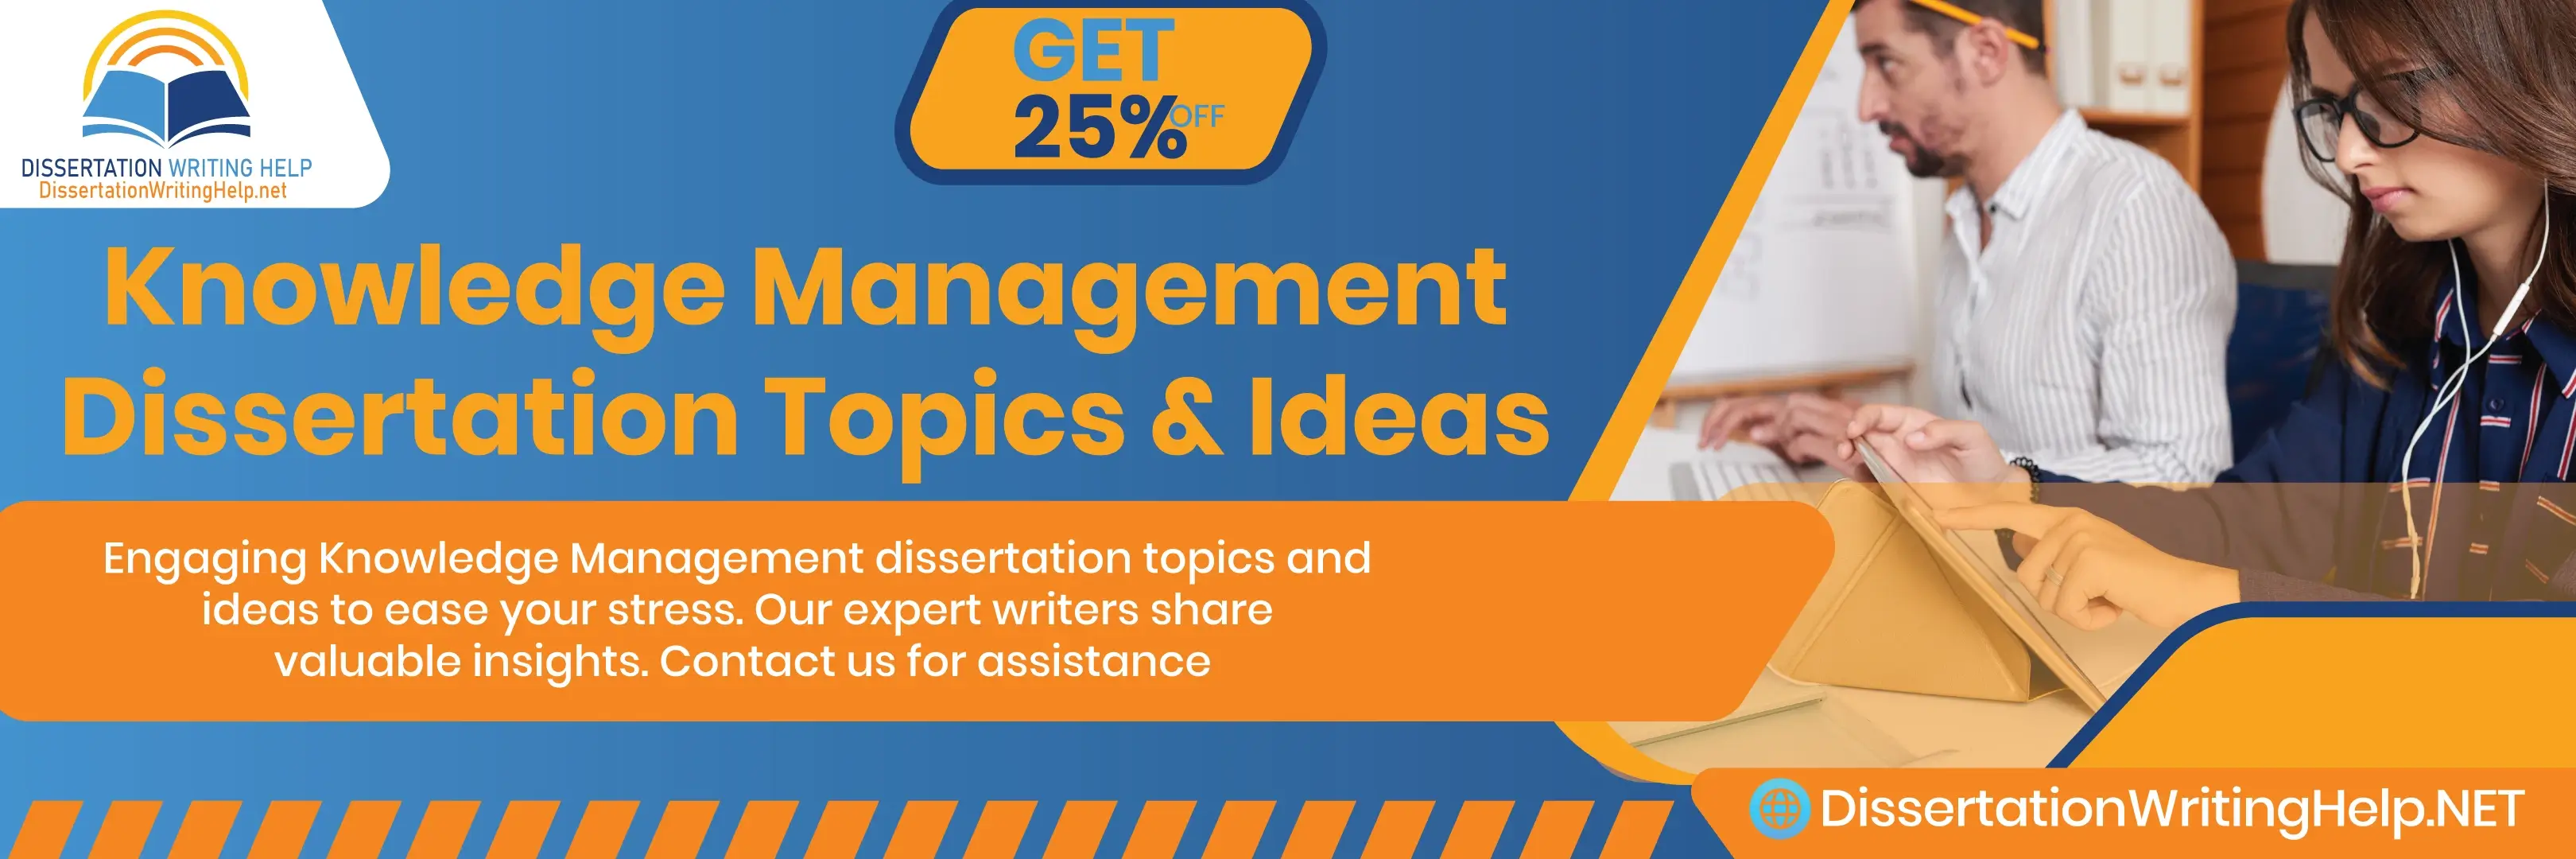 Knowledge-Management-Dissertation-Topics-&-Ideas